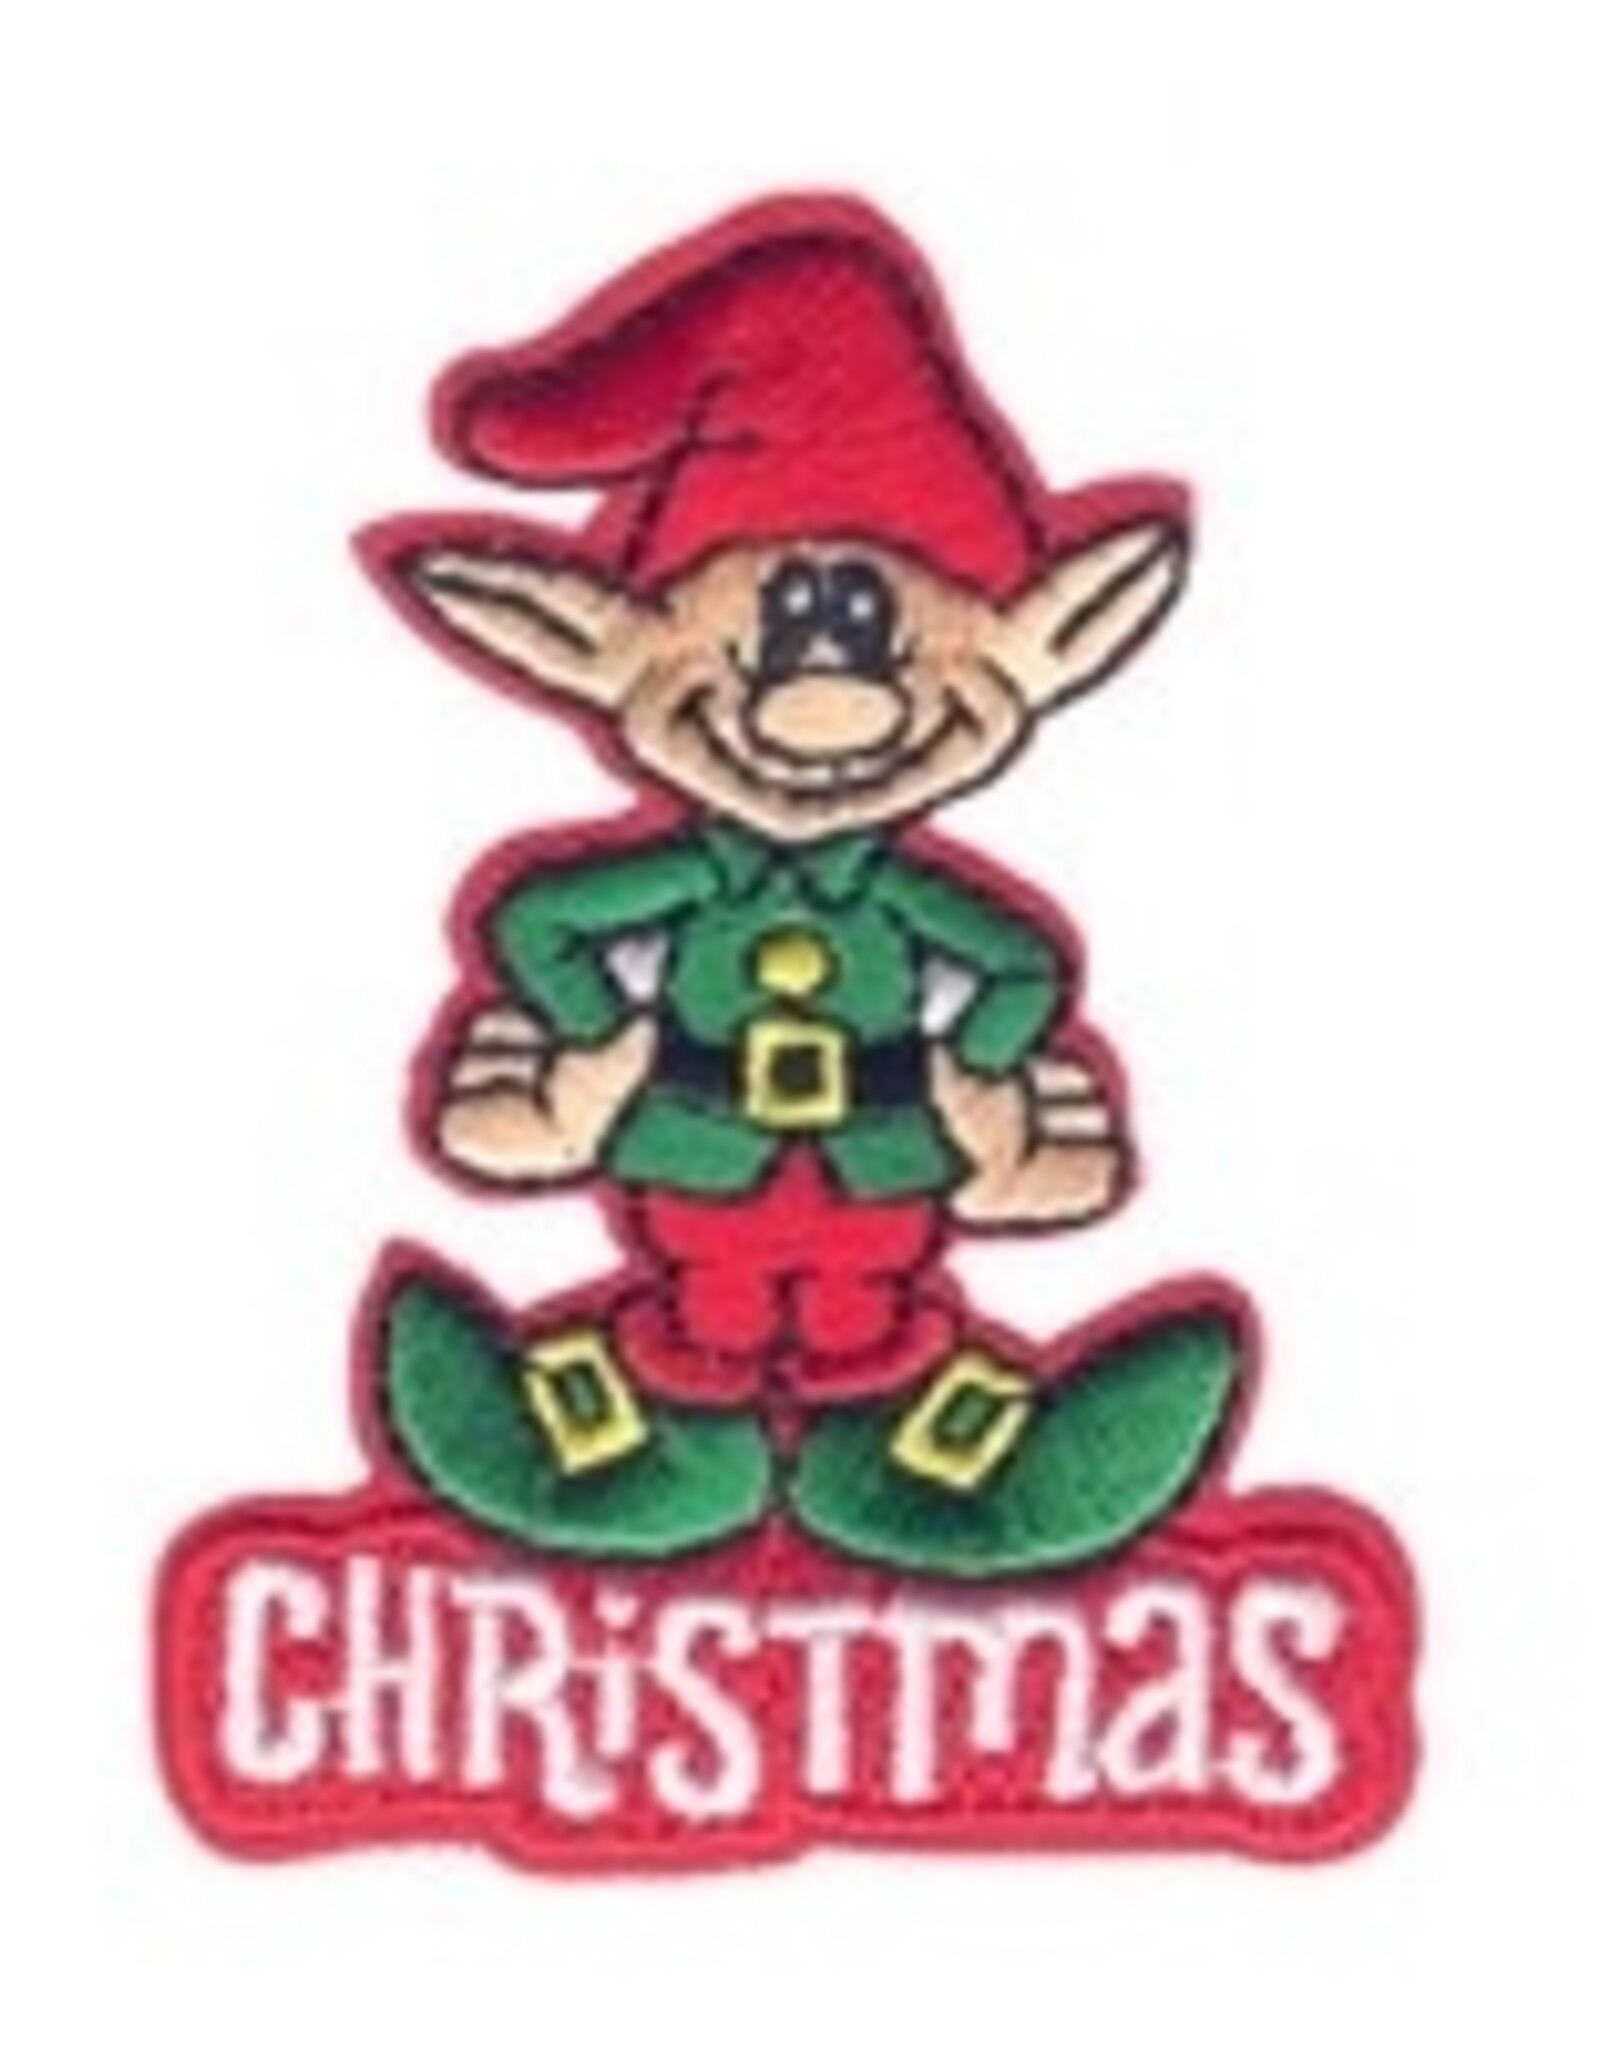 Christmas (Elf) Fun Patch